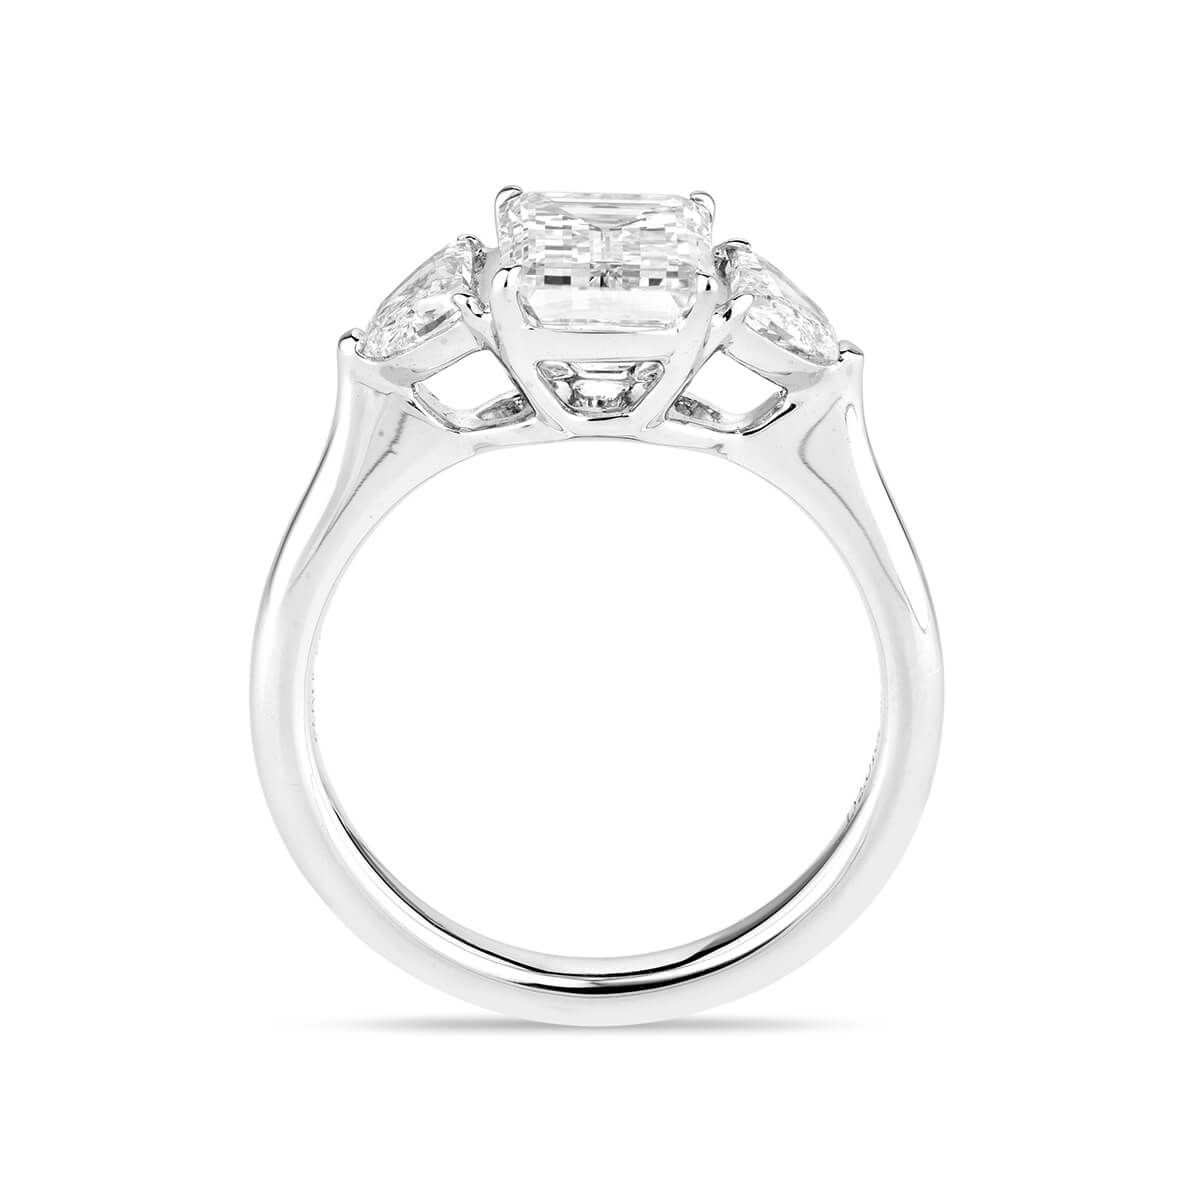  White Diamond Ring, 2.01 Ct. (2.56 Ct. TW), Emerald shape, GIA Certified, 5182503267